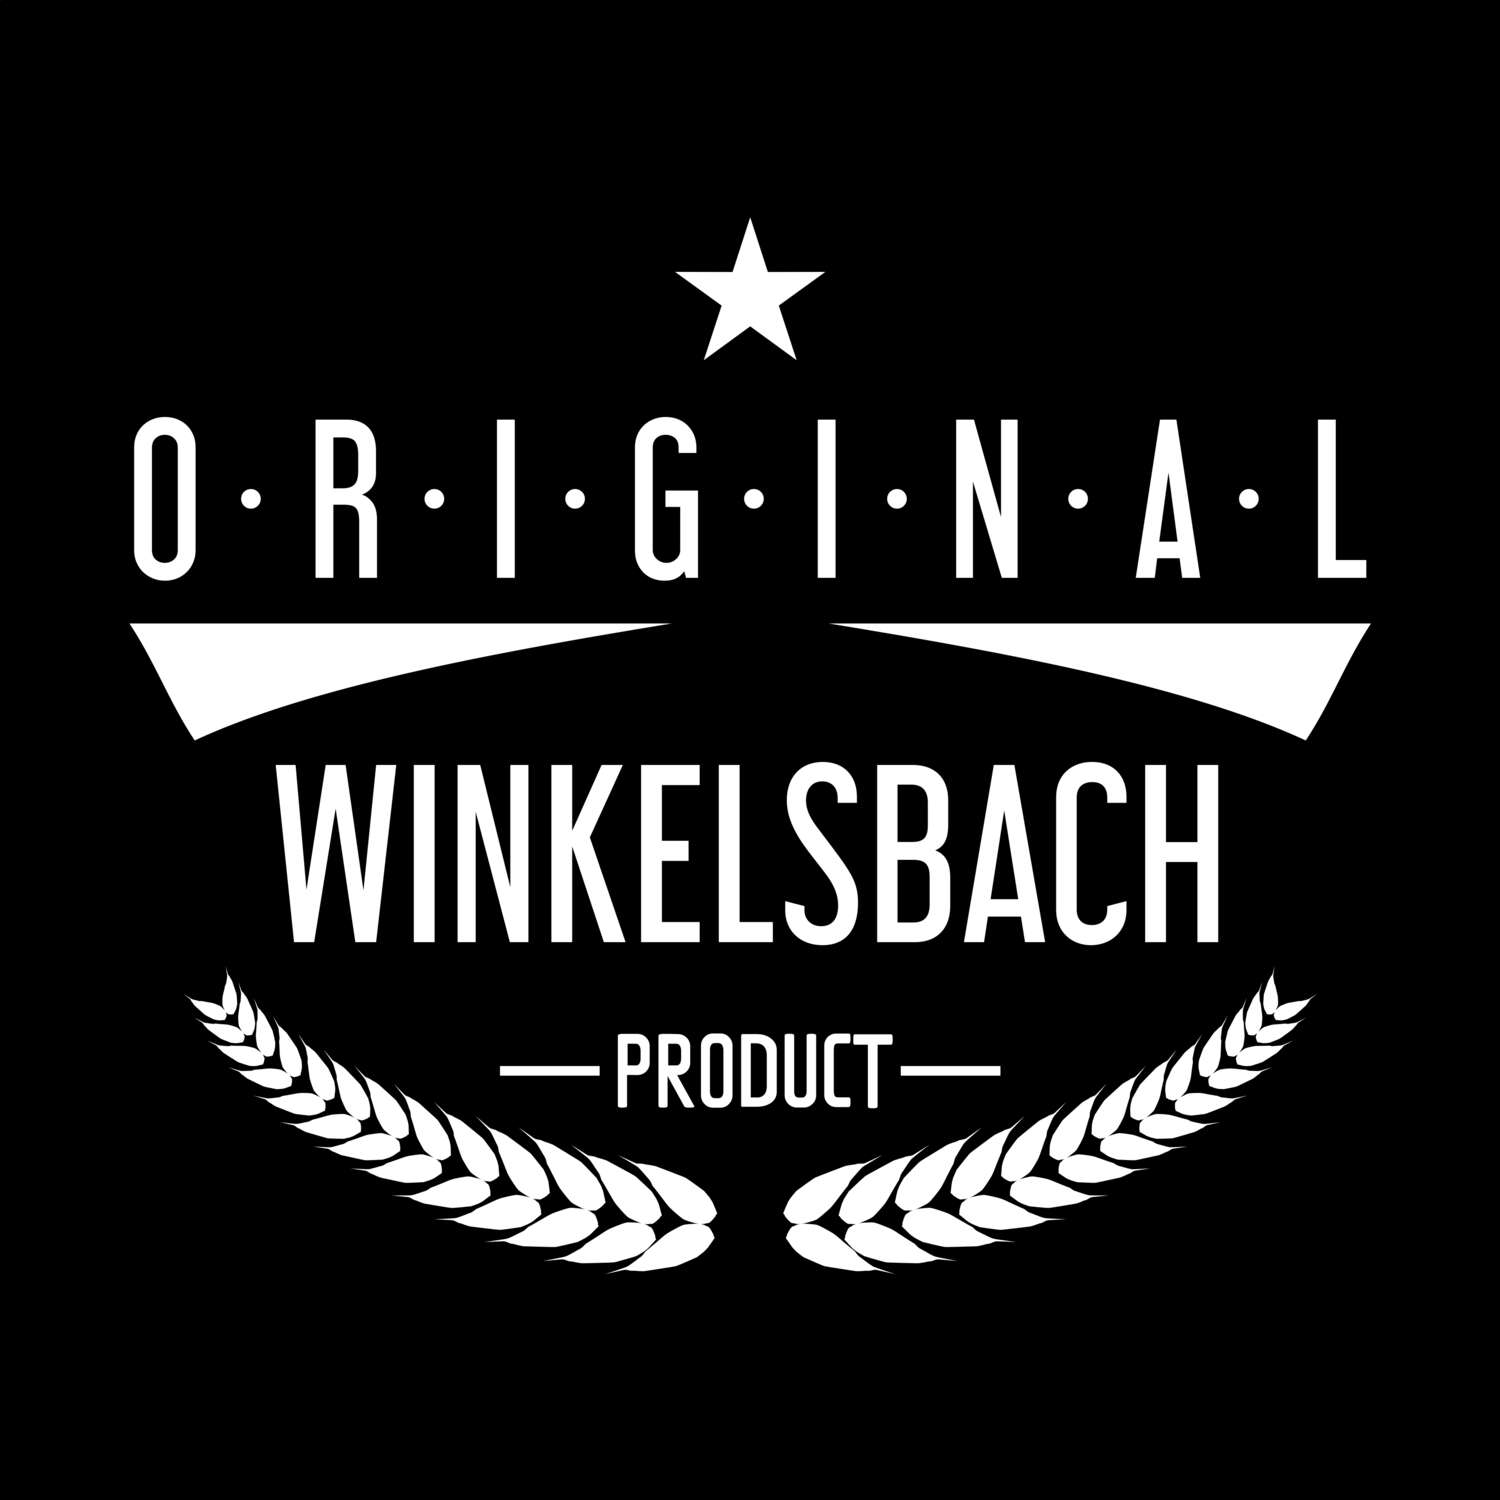 Winkelsbach T-Shirt »Original Product«